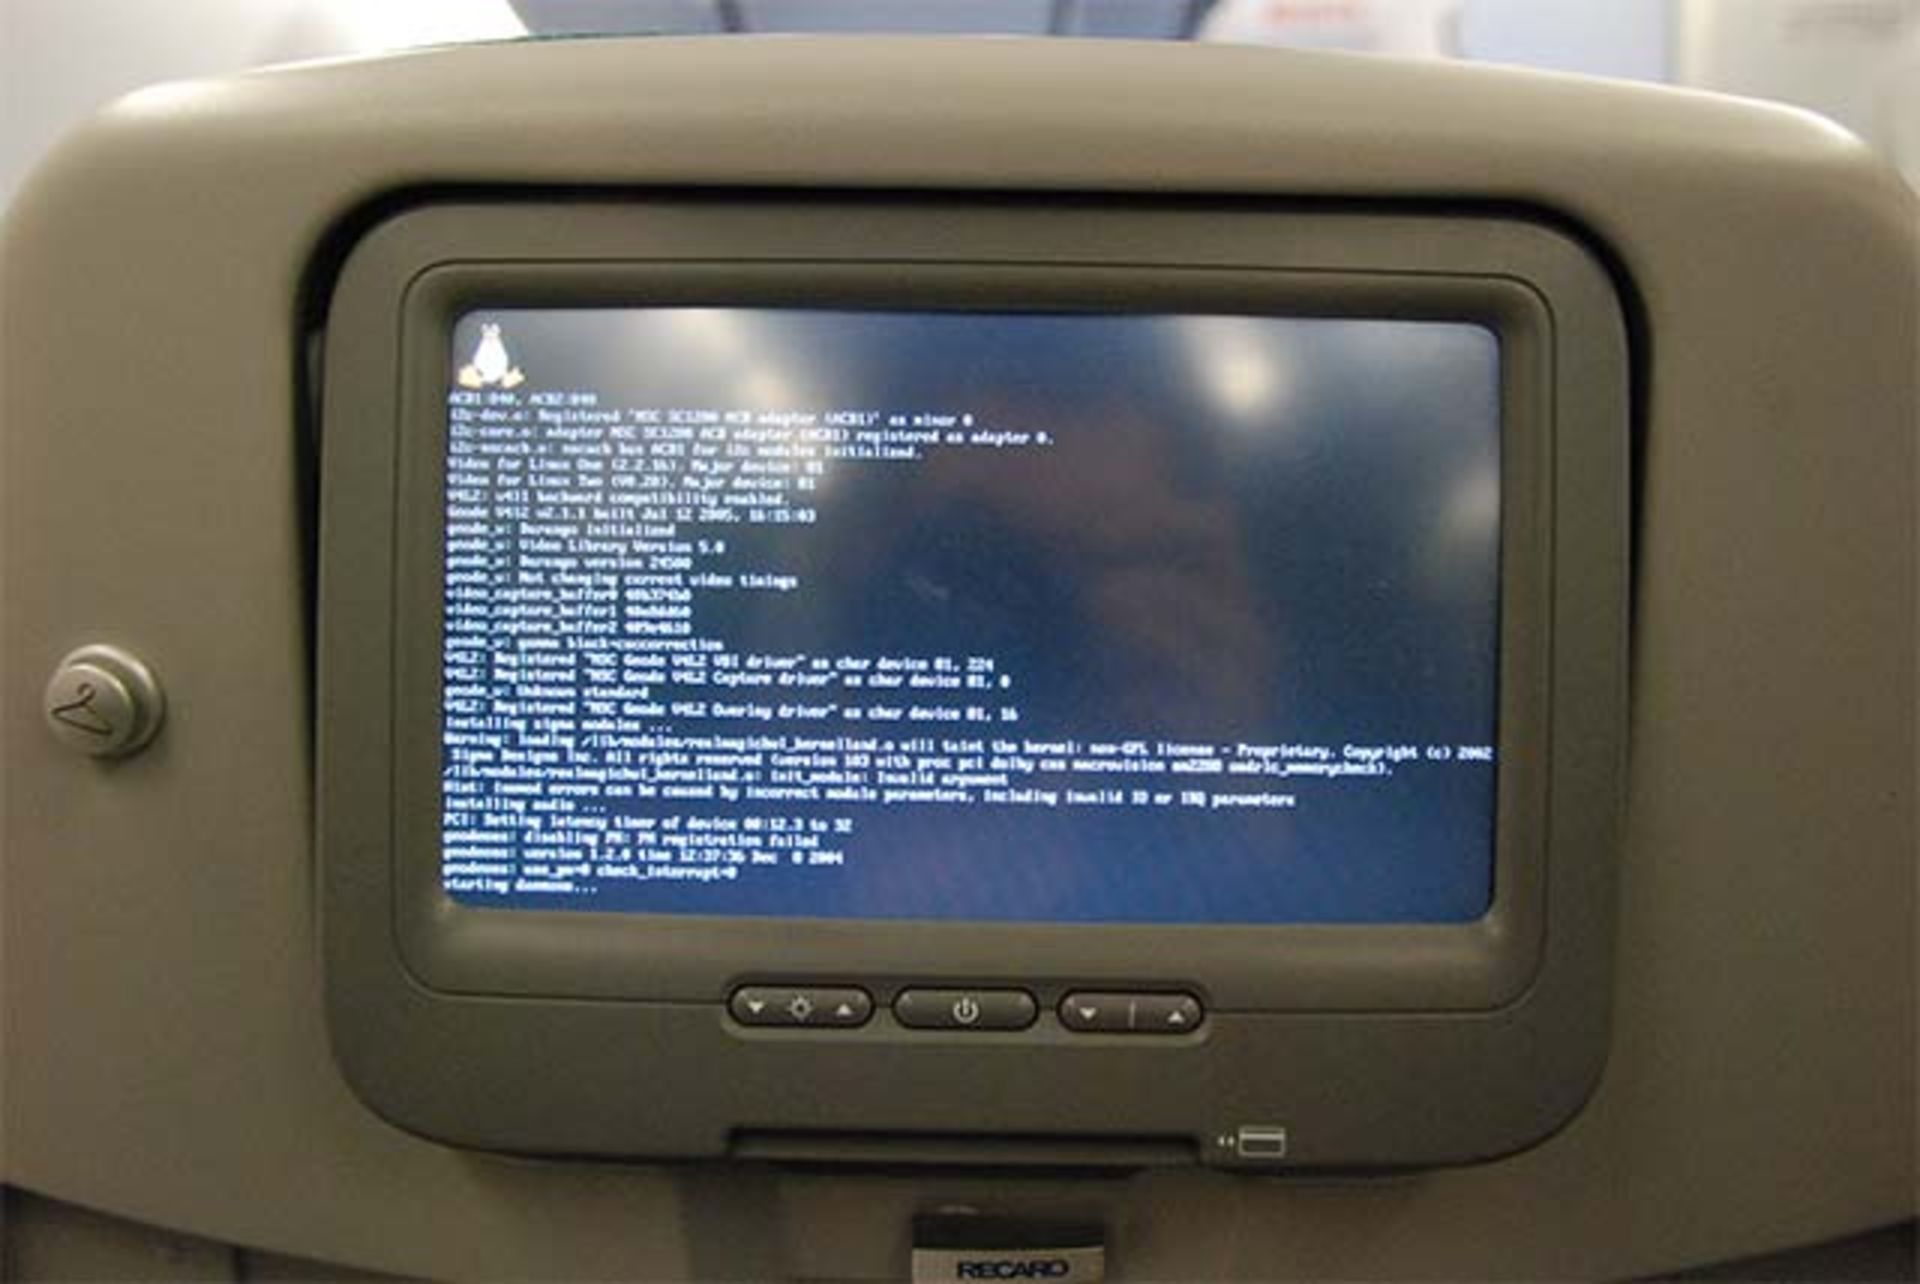 linux runs flight entertainment